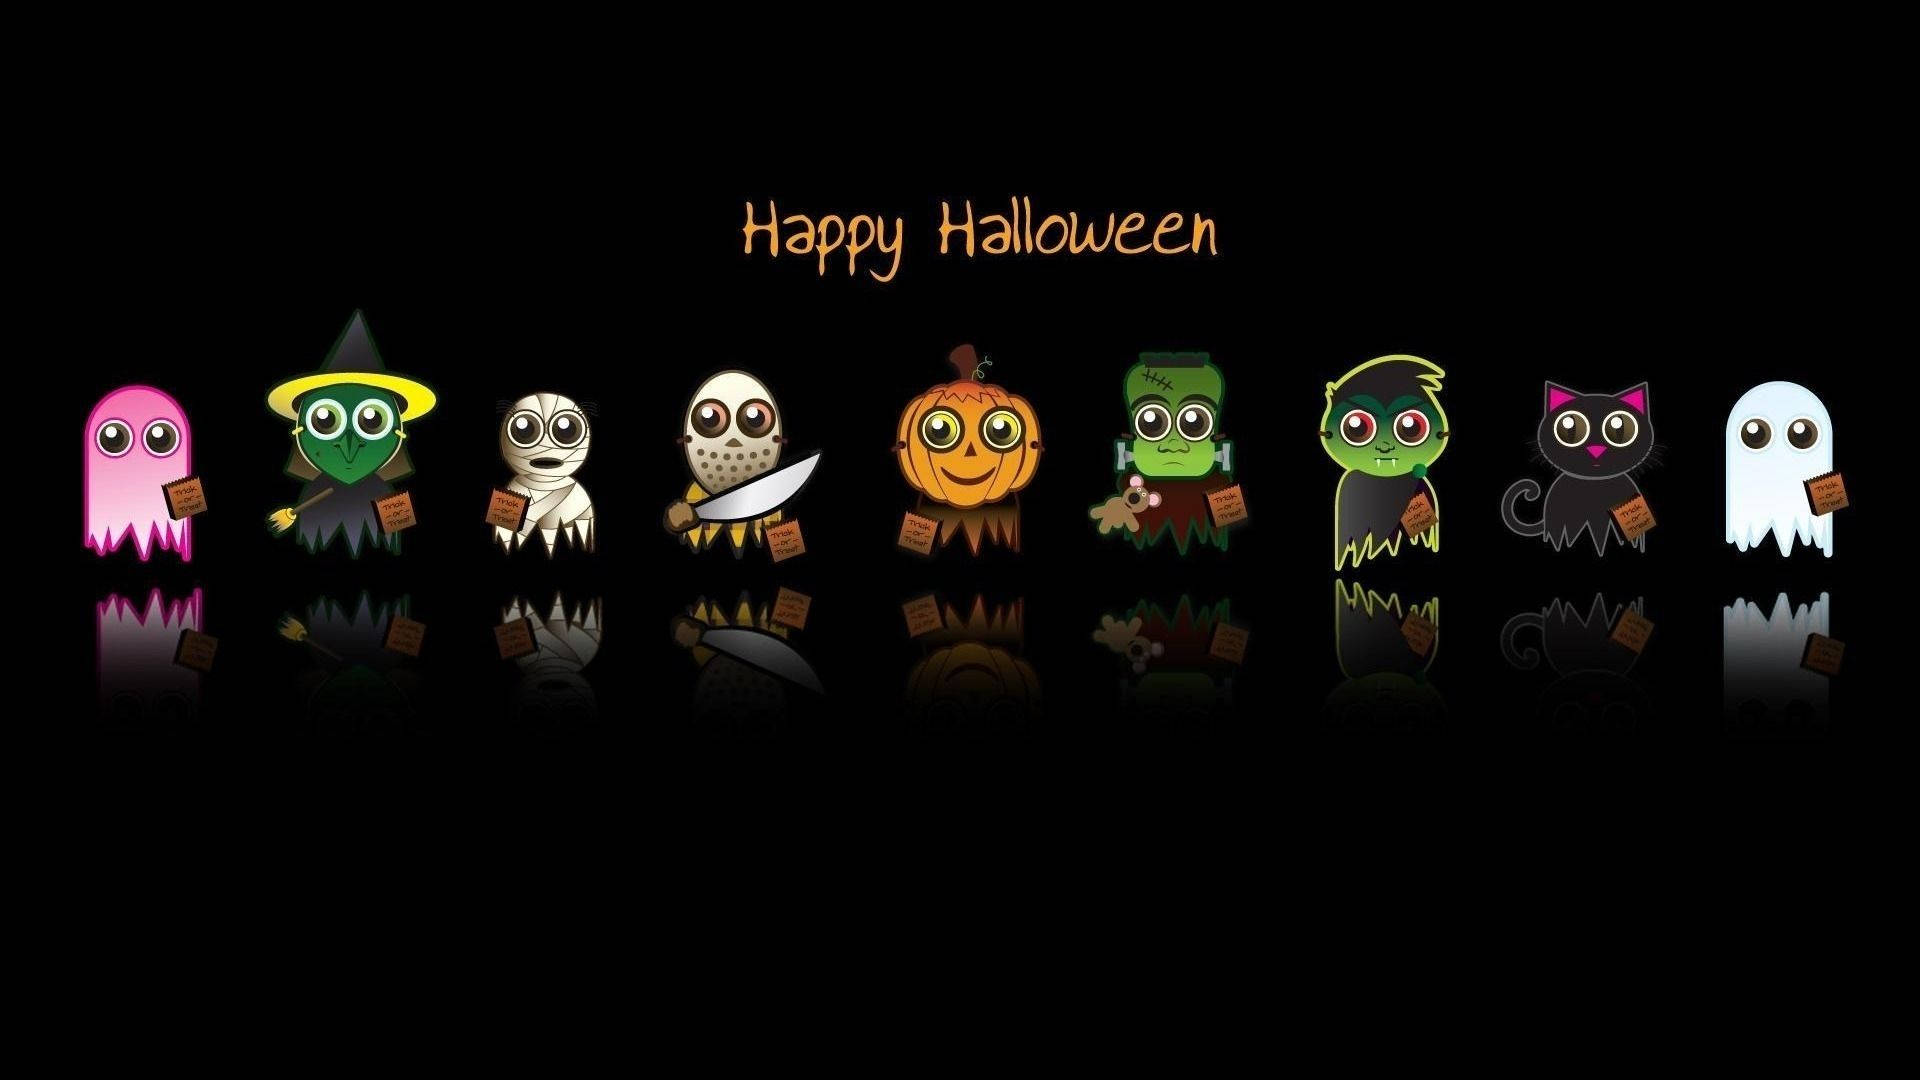 Cartoon Halloween Characters In The Dark Background